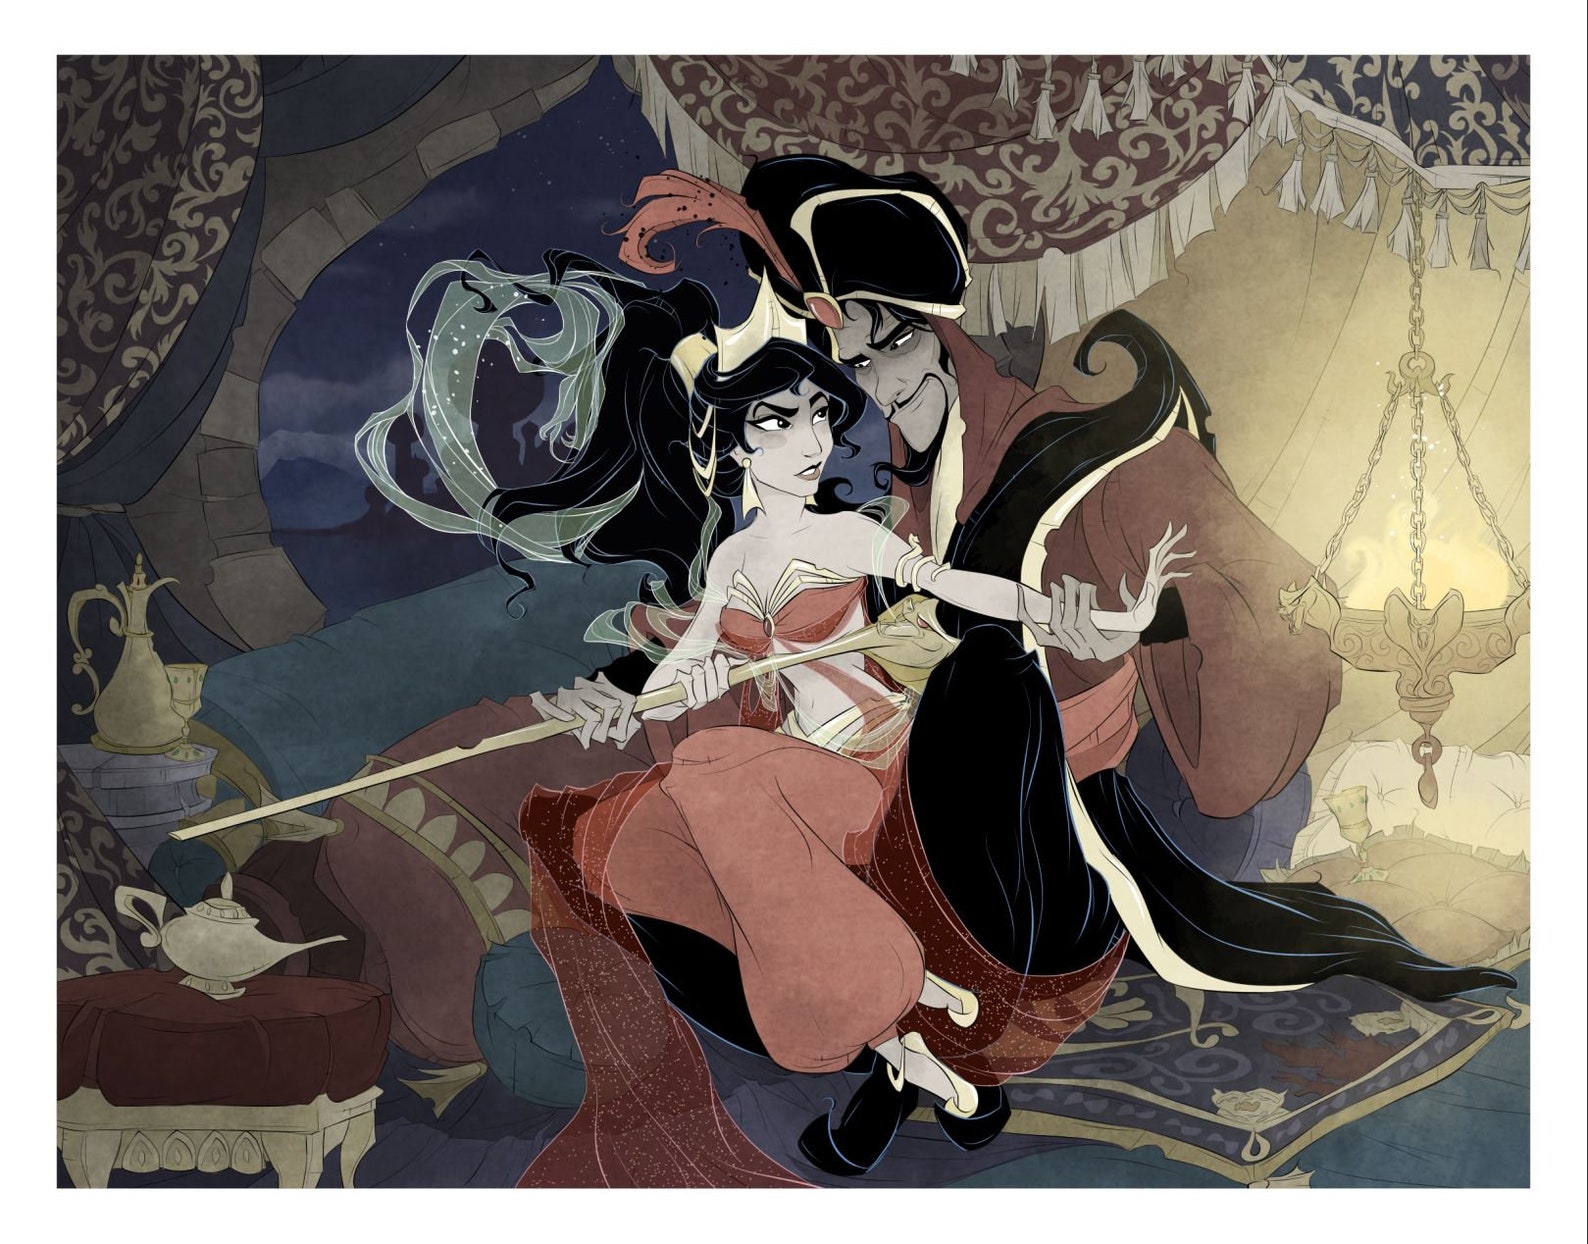 Jafar / Jasmine / Princess / Slave / Fan Art / Print / Arabian image 0.